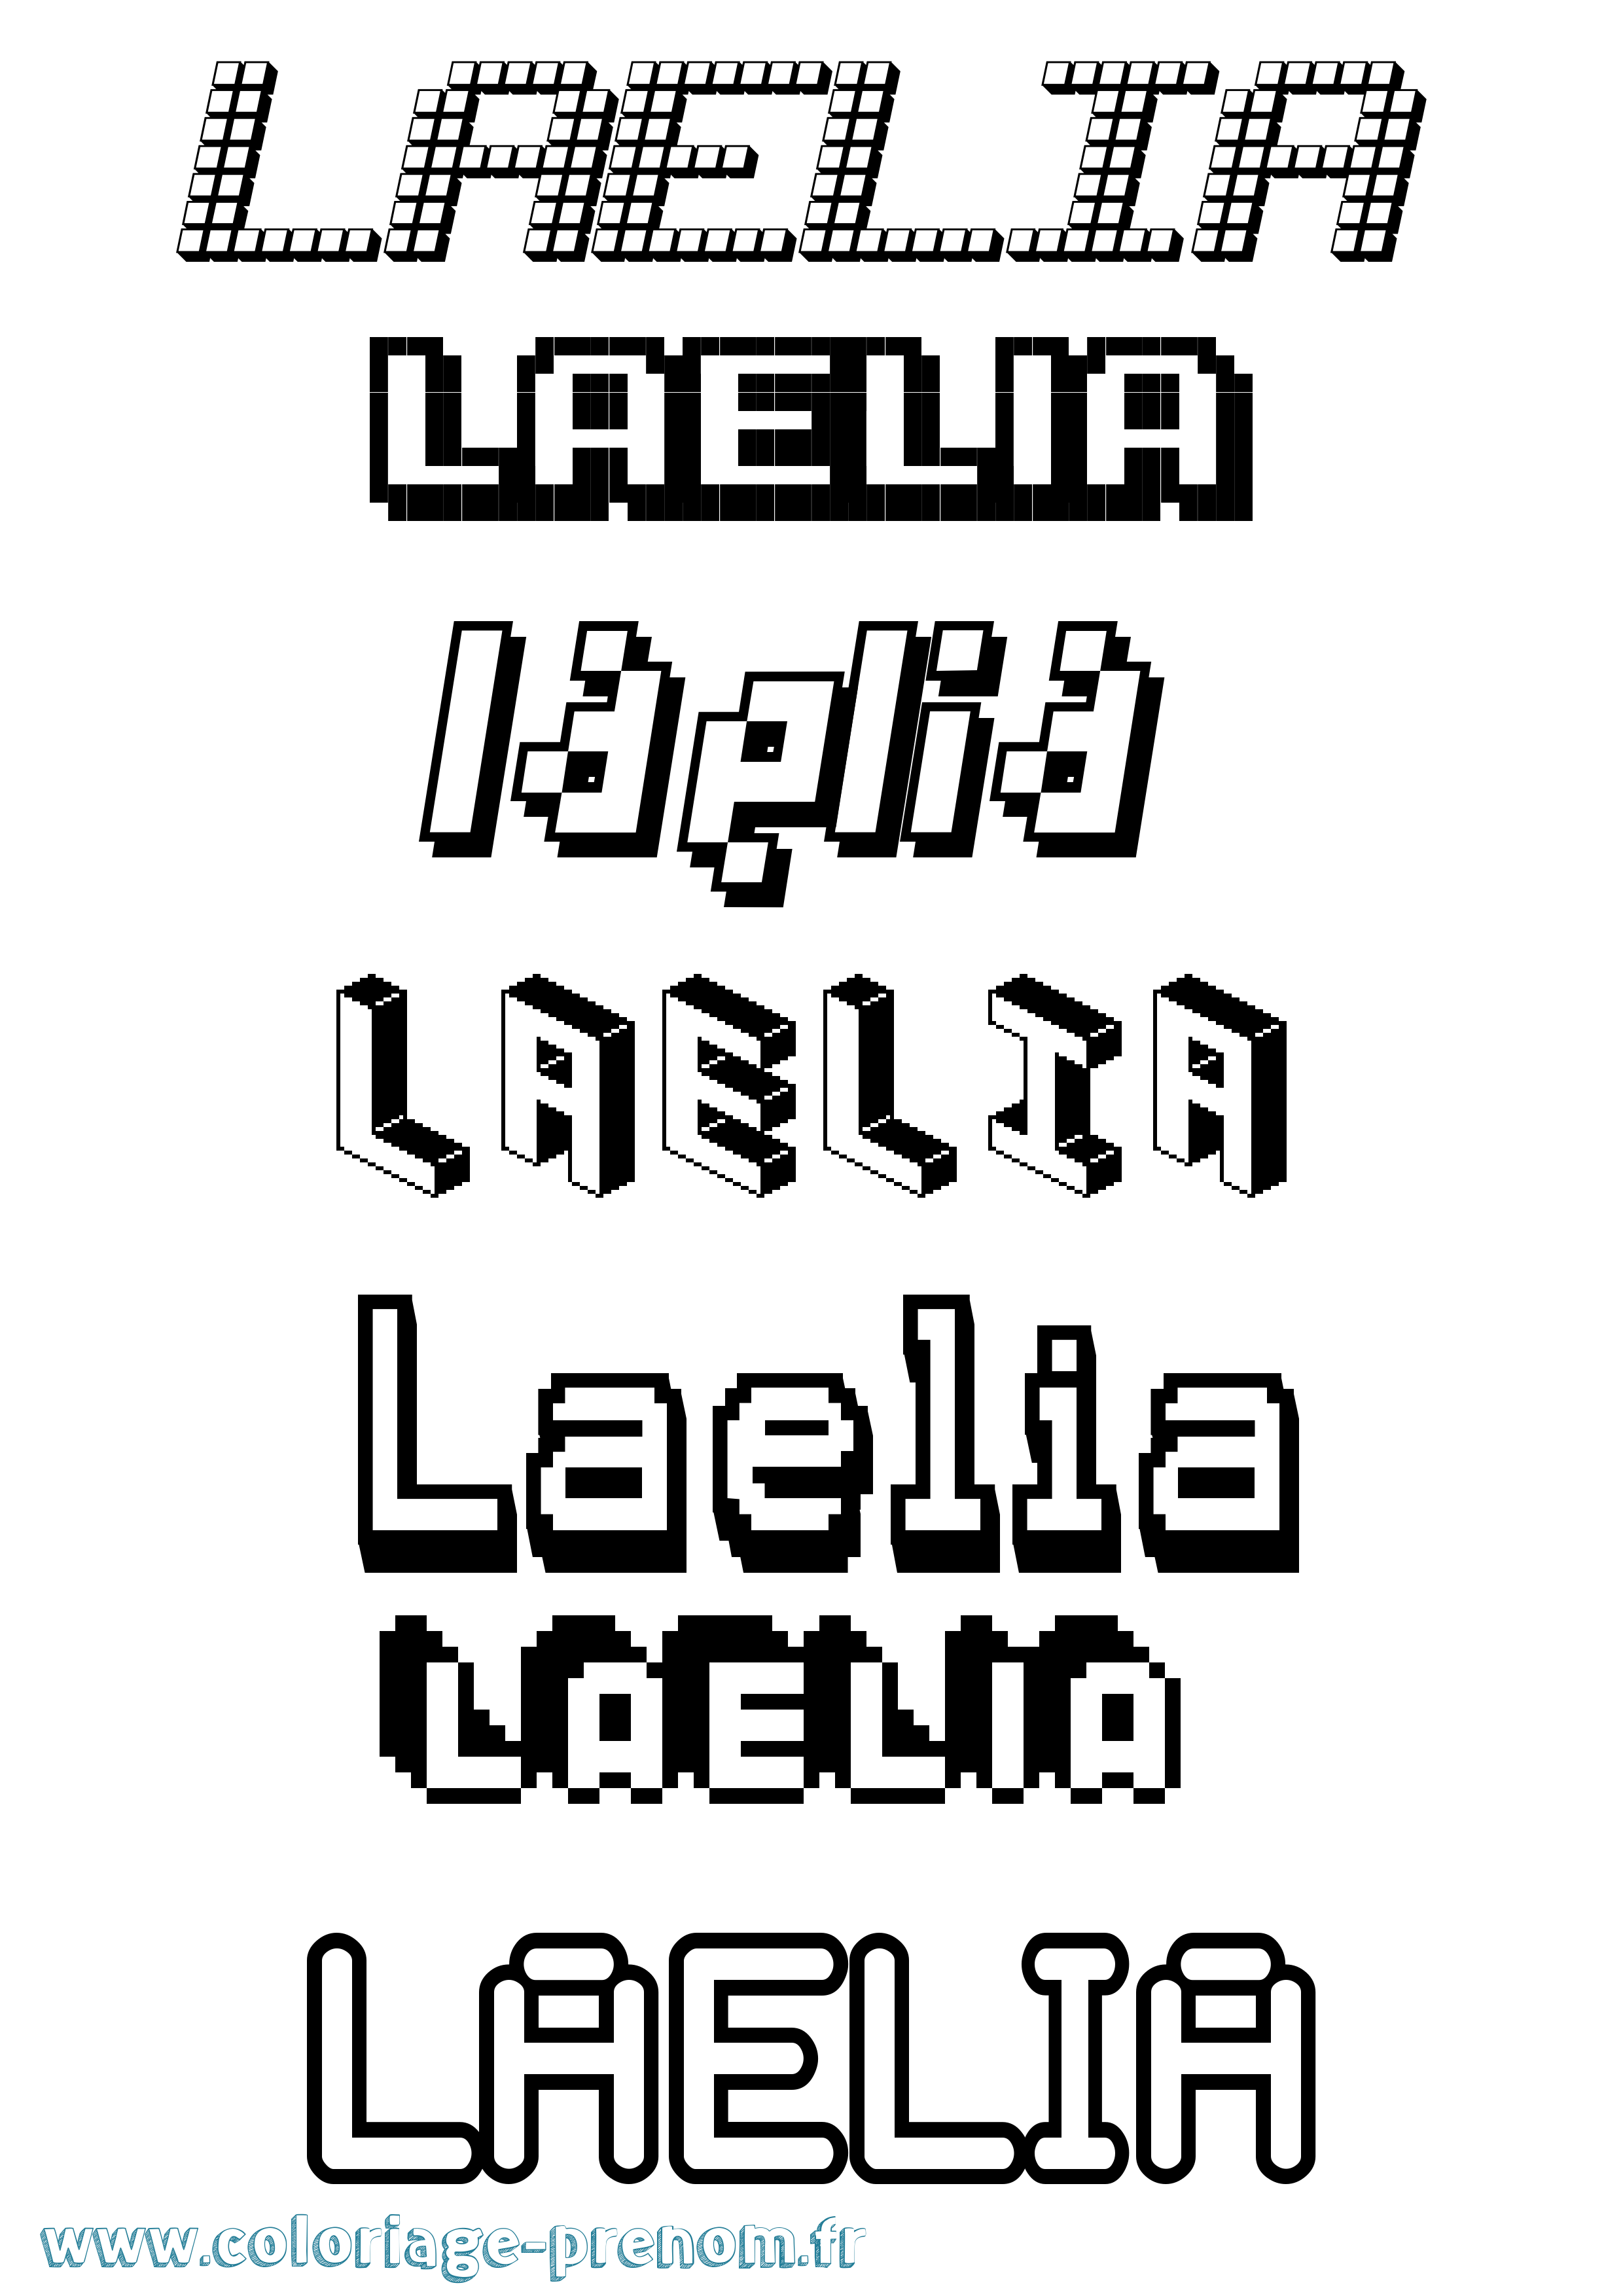 Coloriage prénom Laelia Pixel